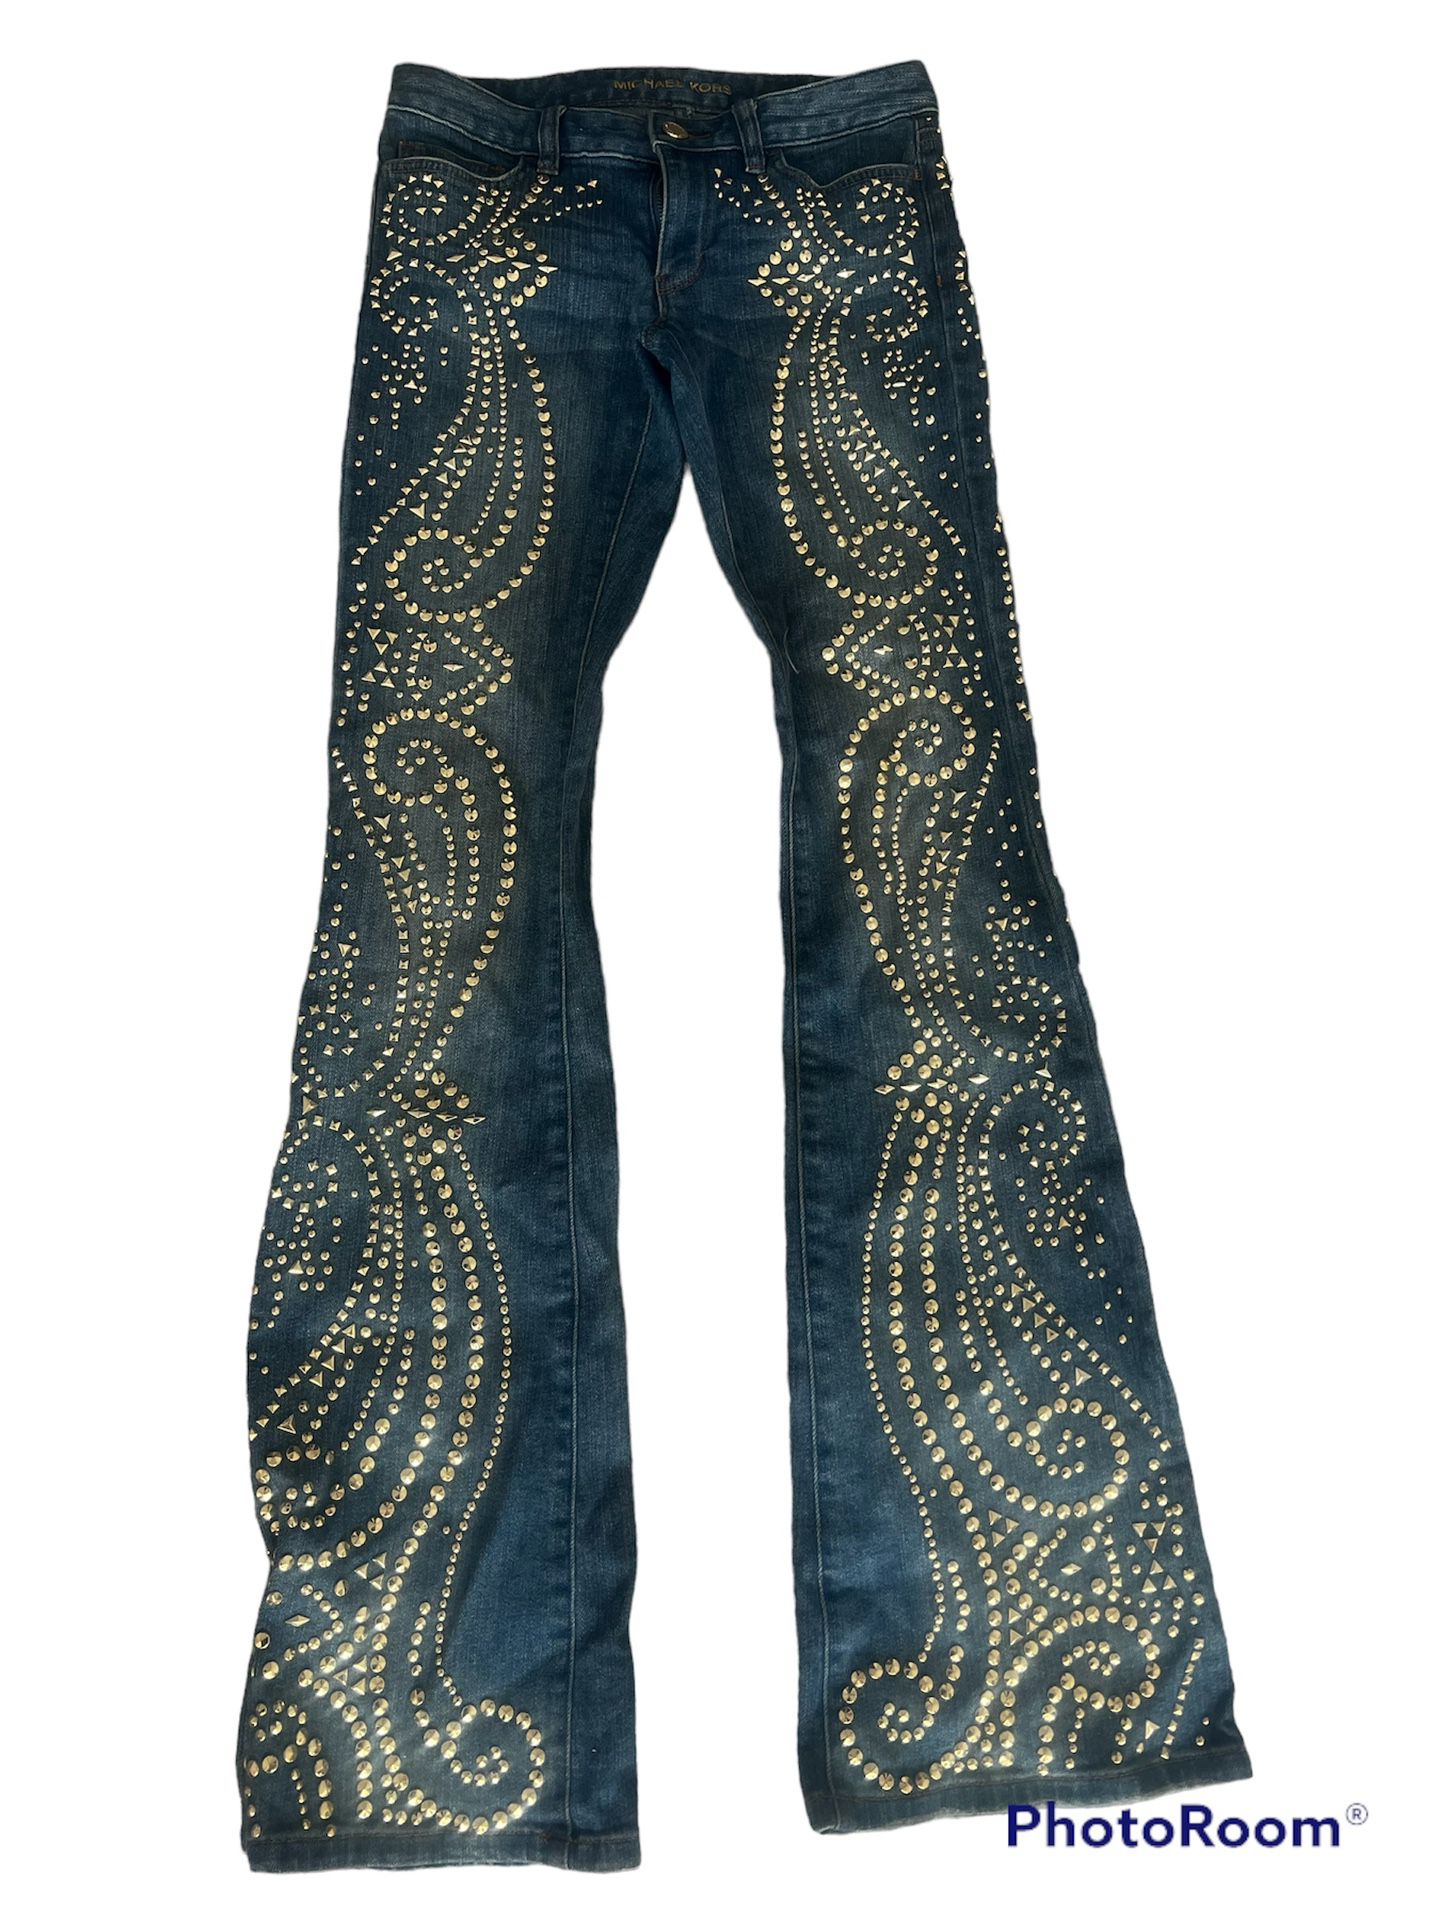 Michael Kors Studded Jeans